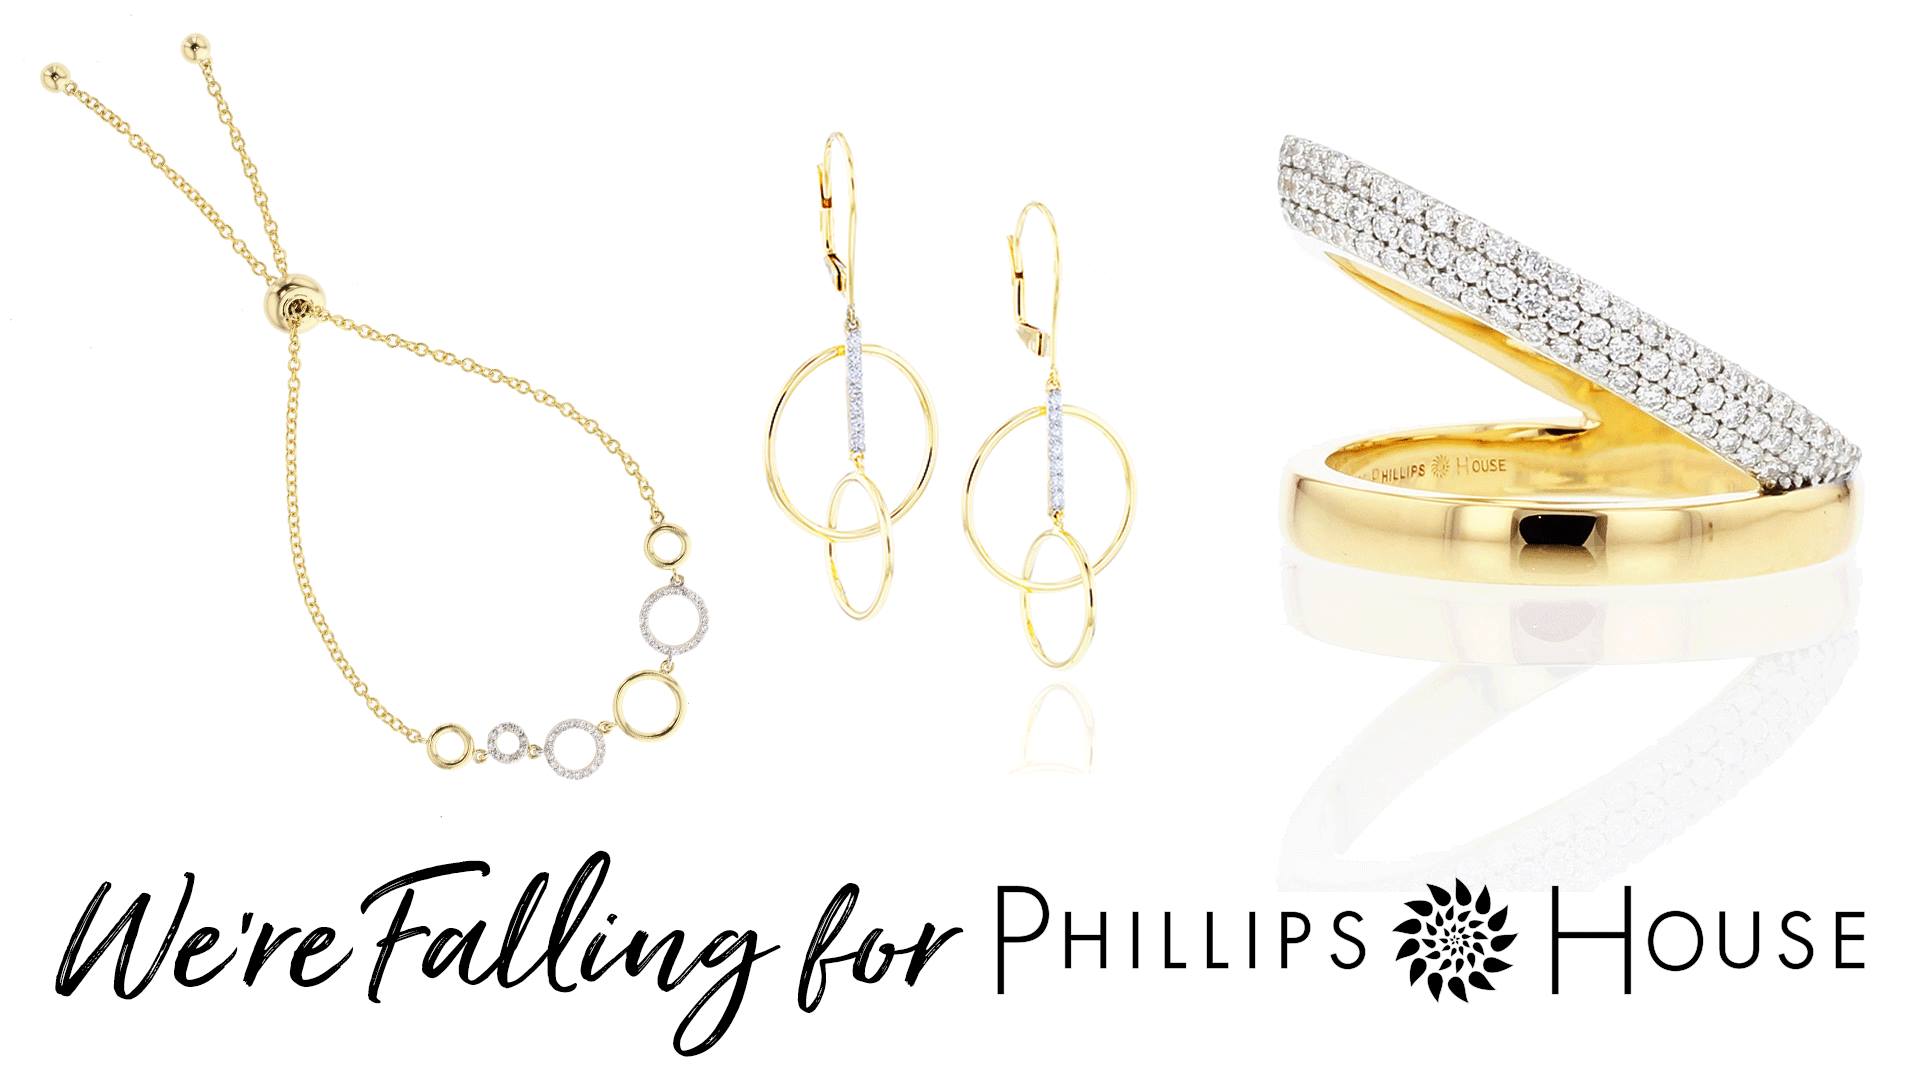 Phillips House Jewelry